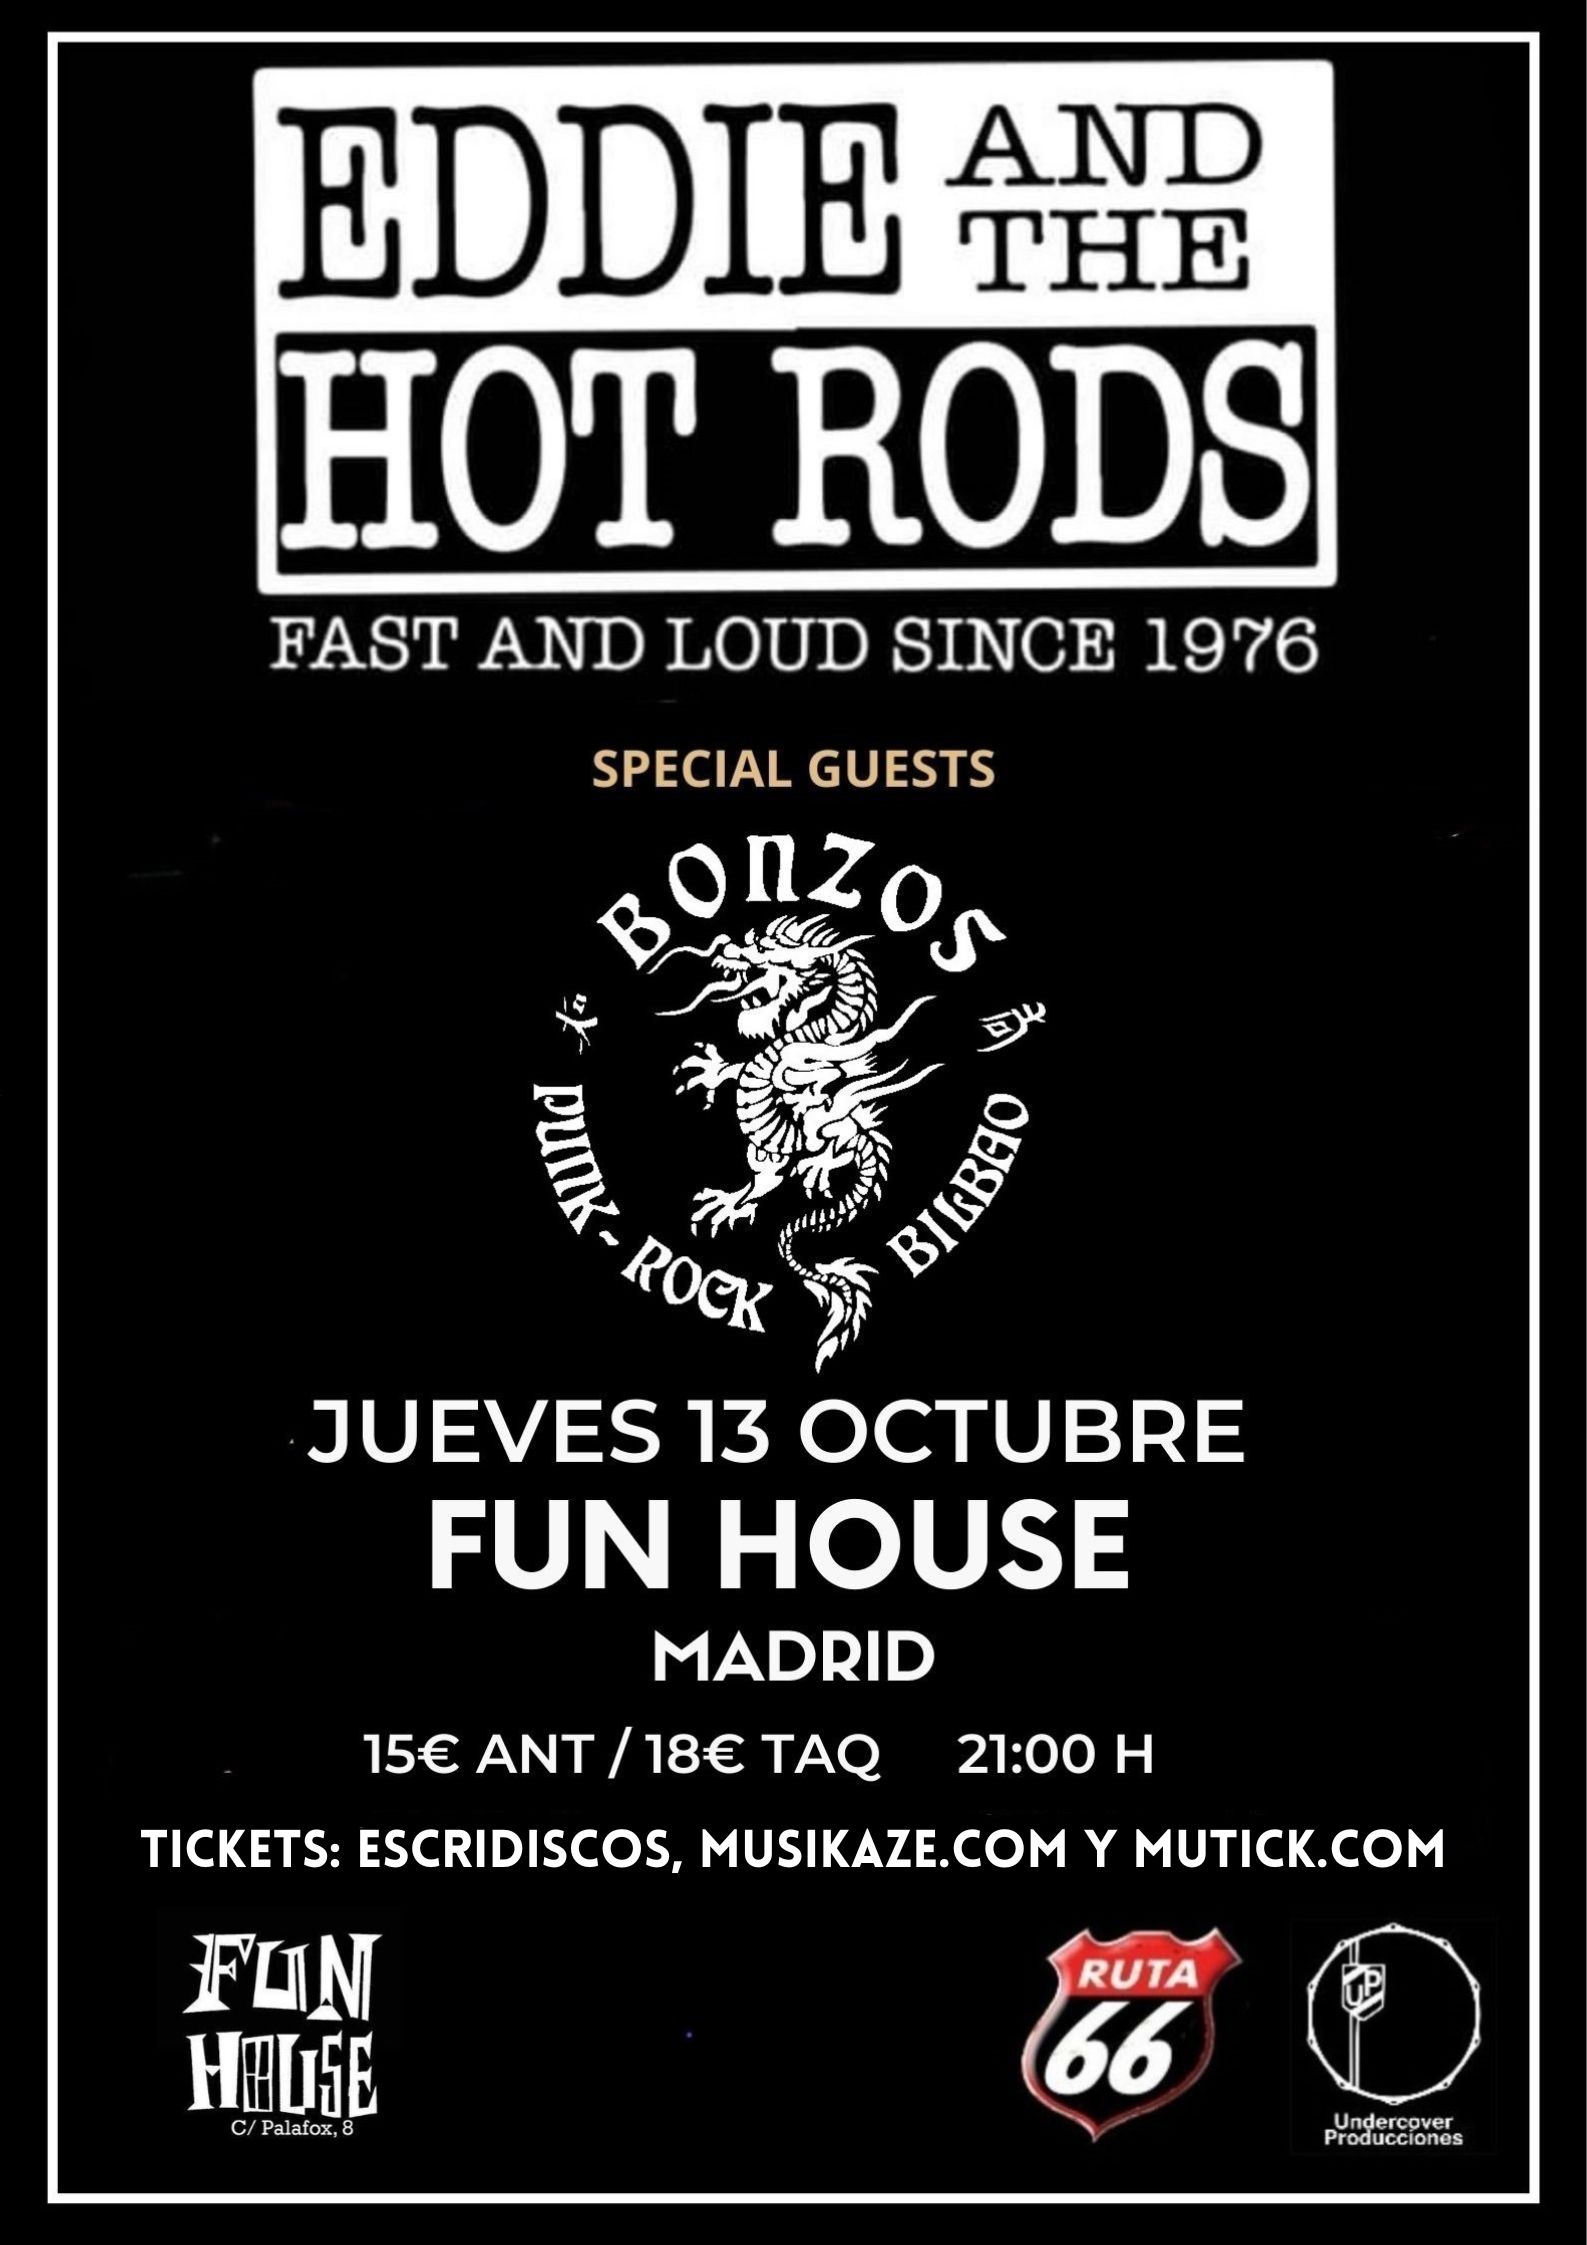 EDDIE & The Hot Rods + Bonzos en Madrid - Mutick